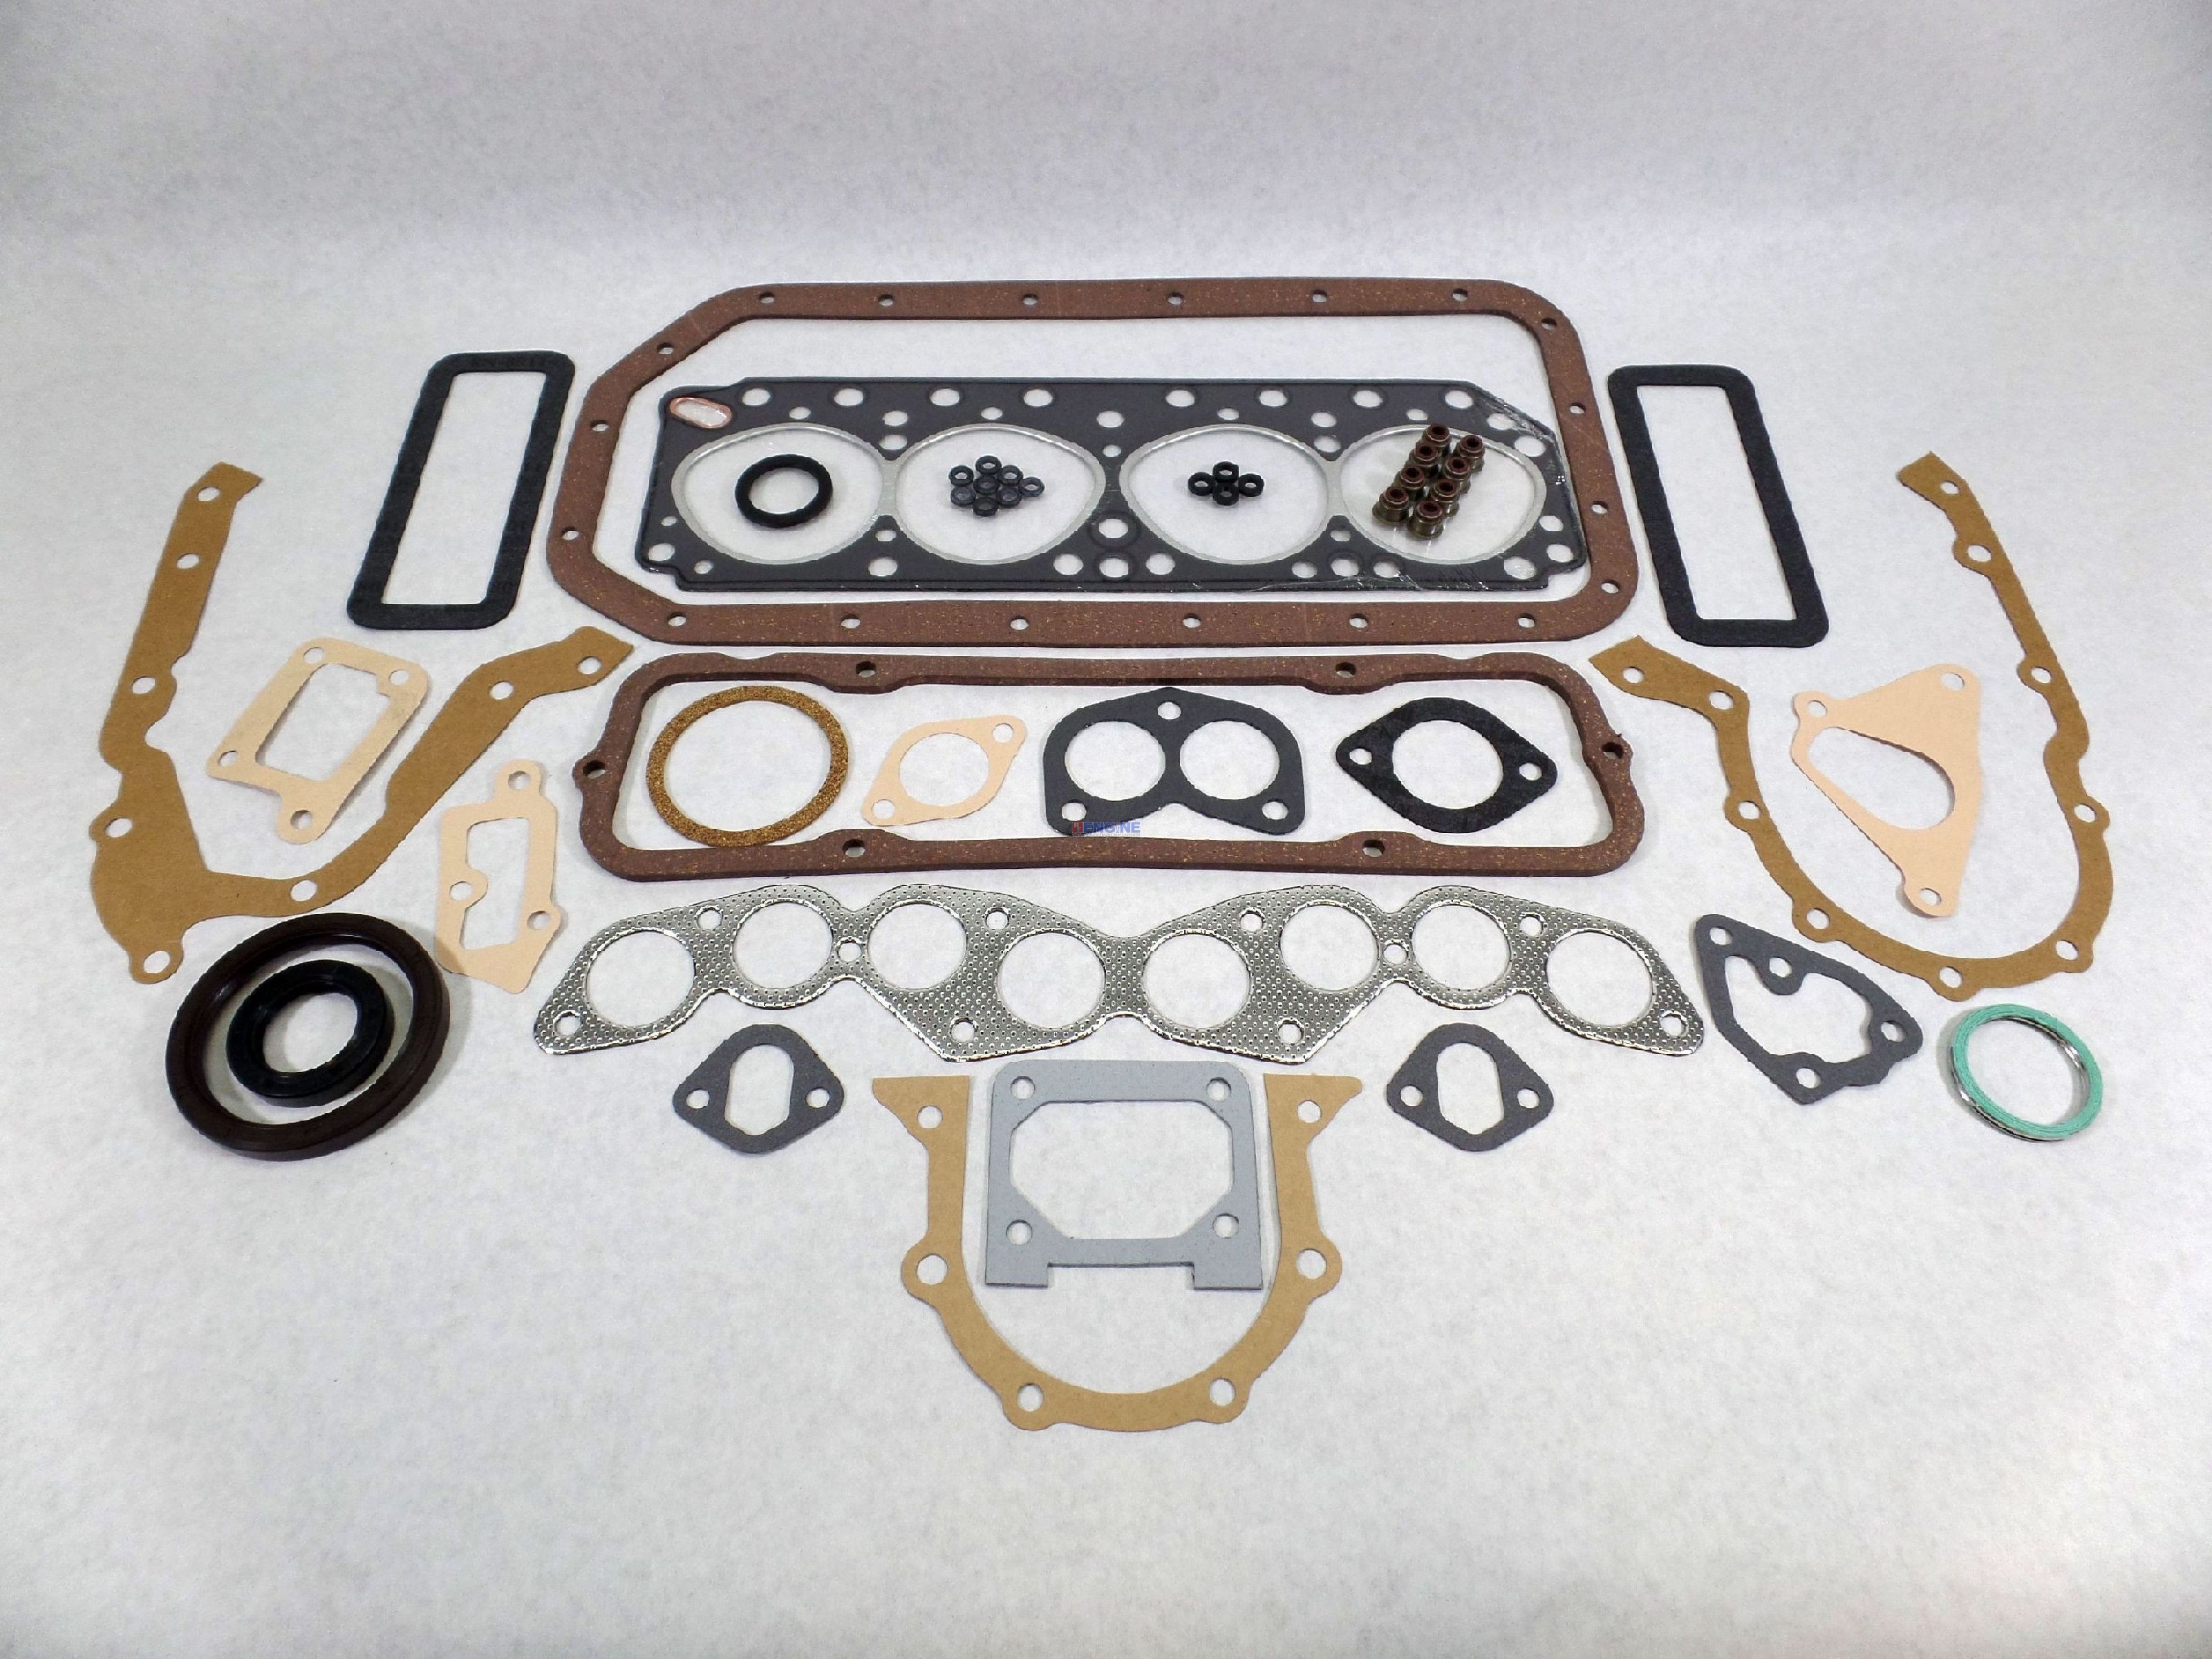 Toyota diesel engine overhaul kits